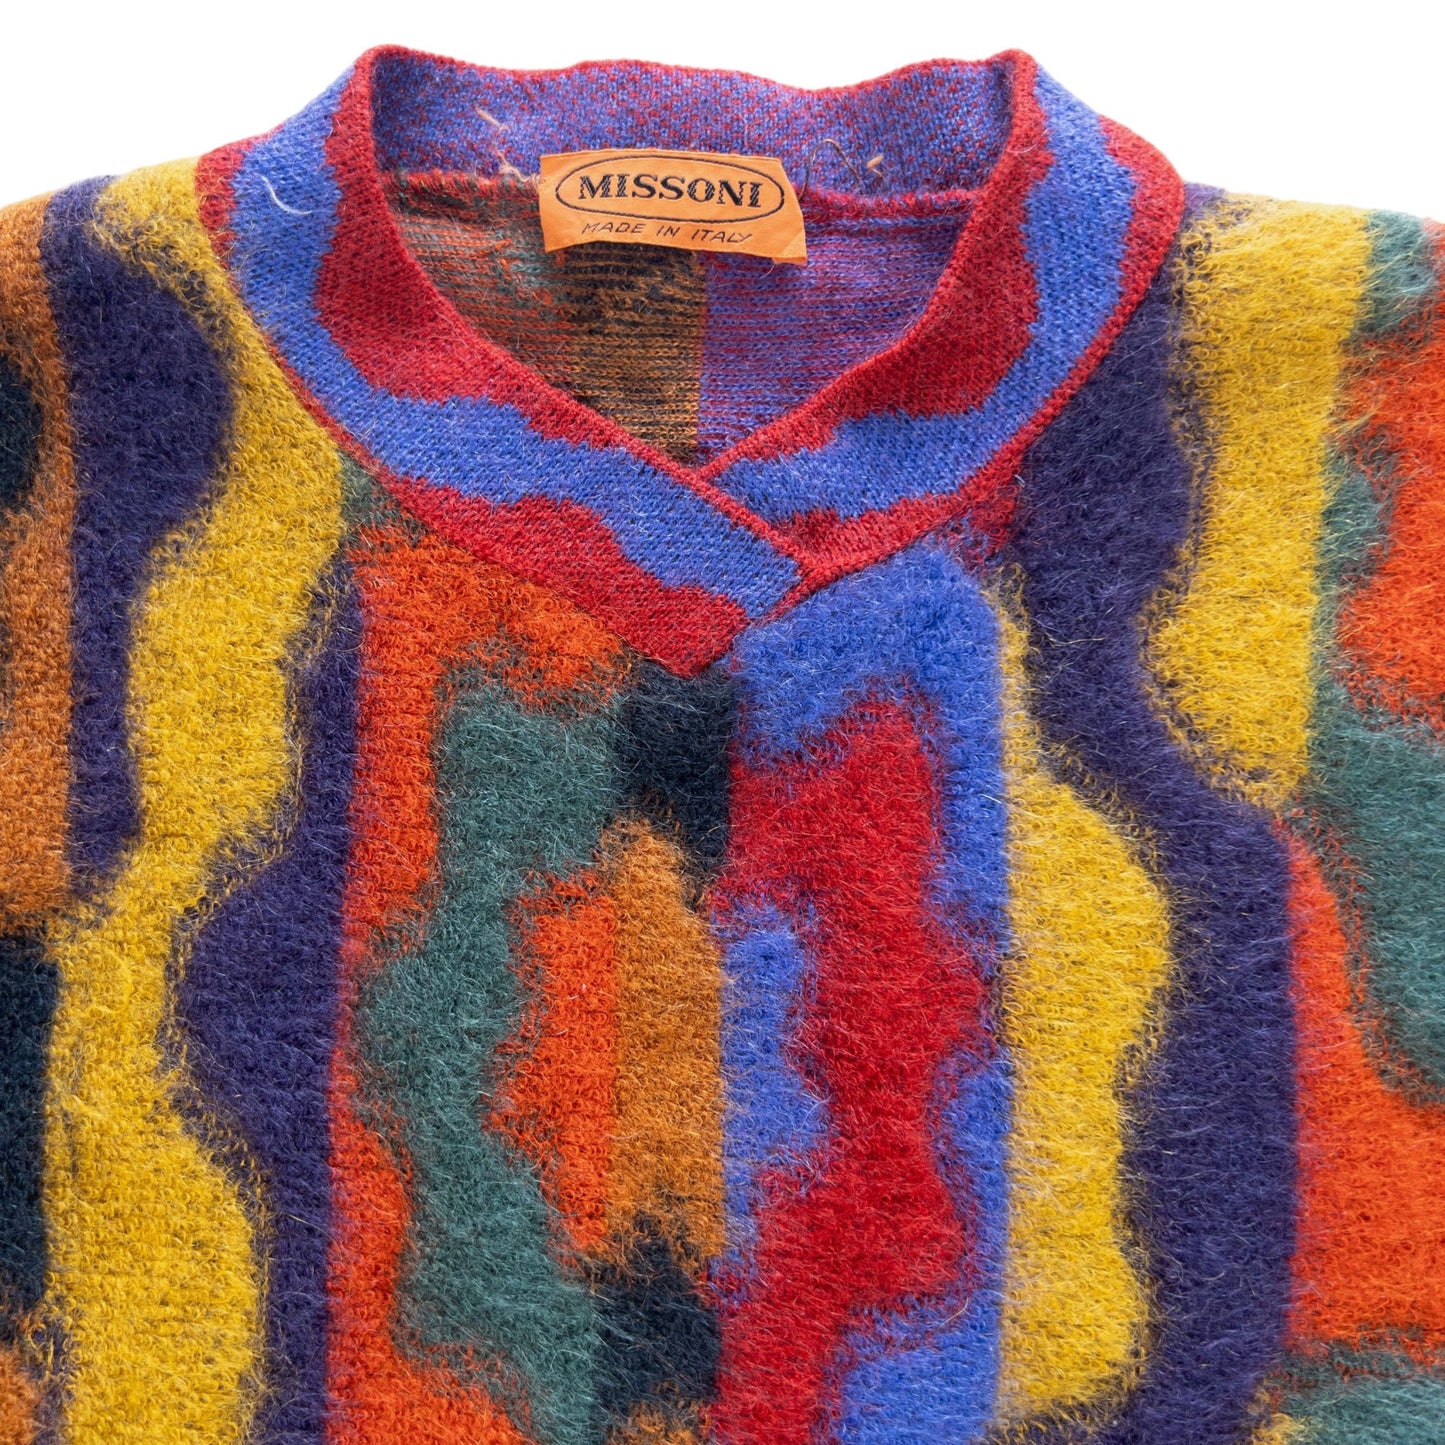 Vintage Missoni Knitted Jumper Size XL